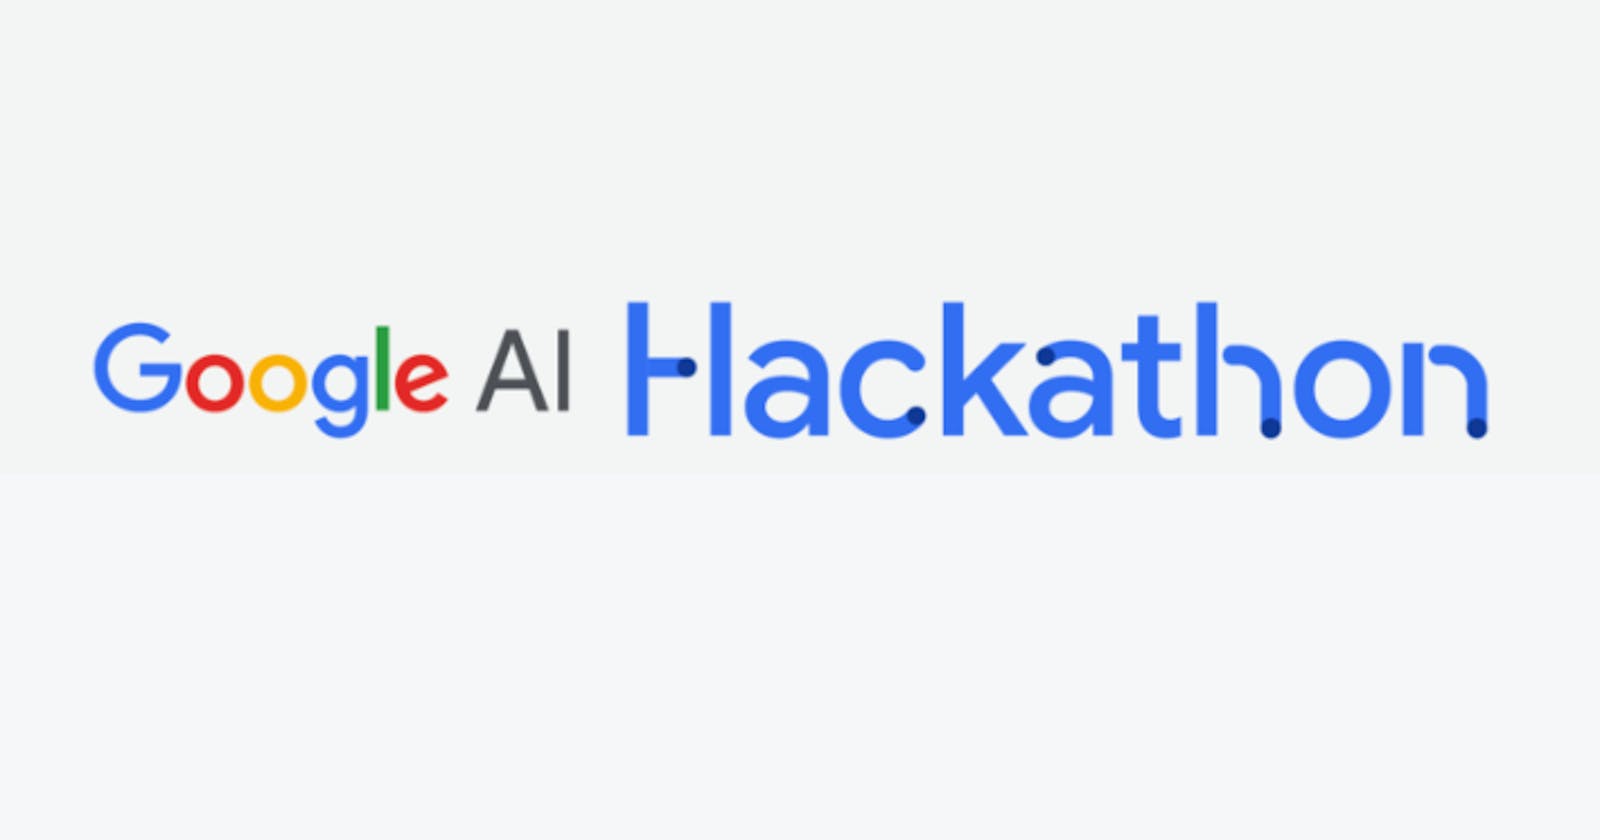 Google AI Hackathon